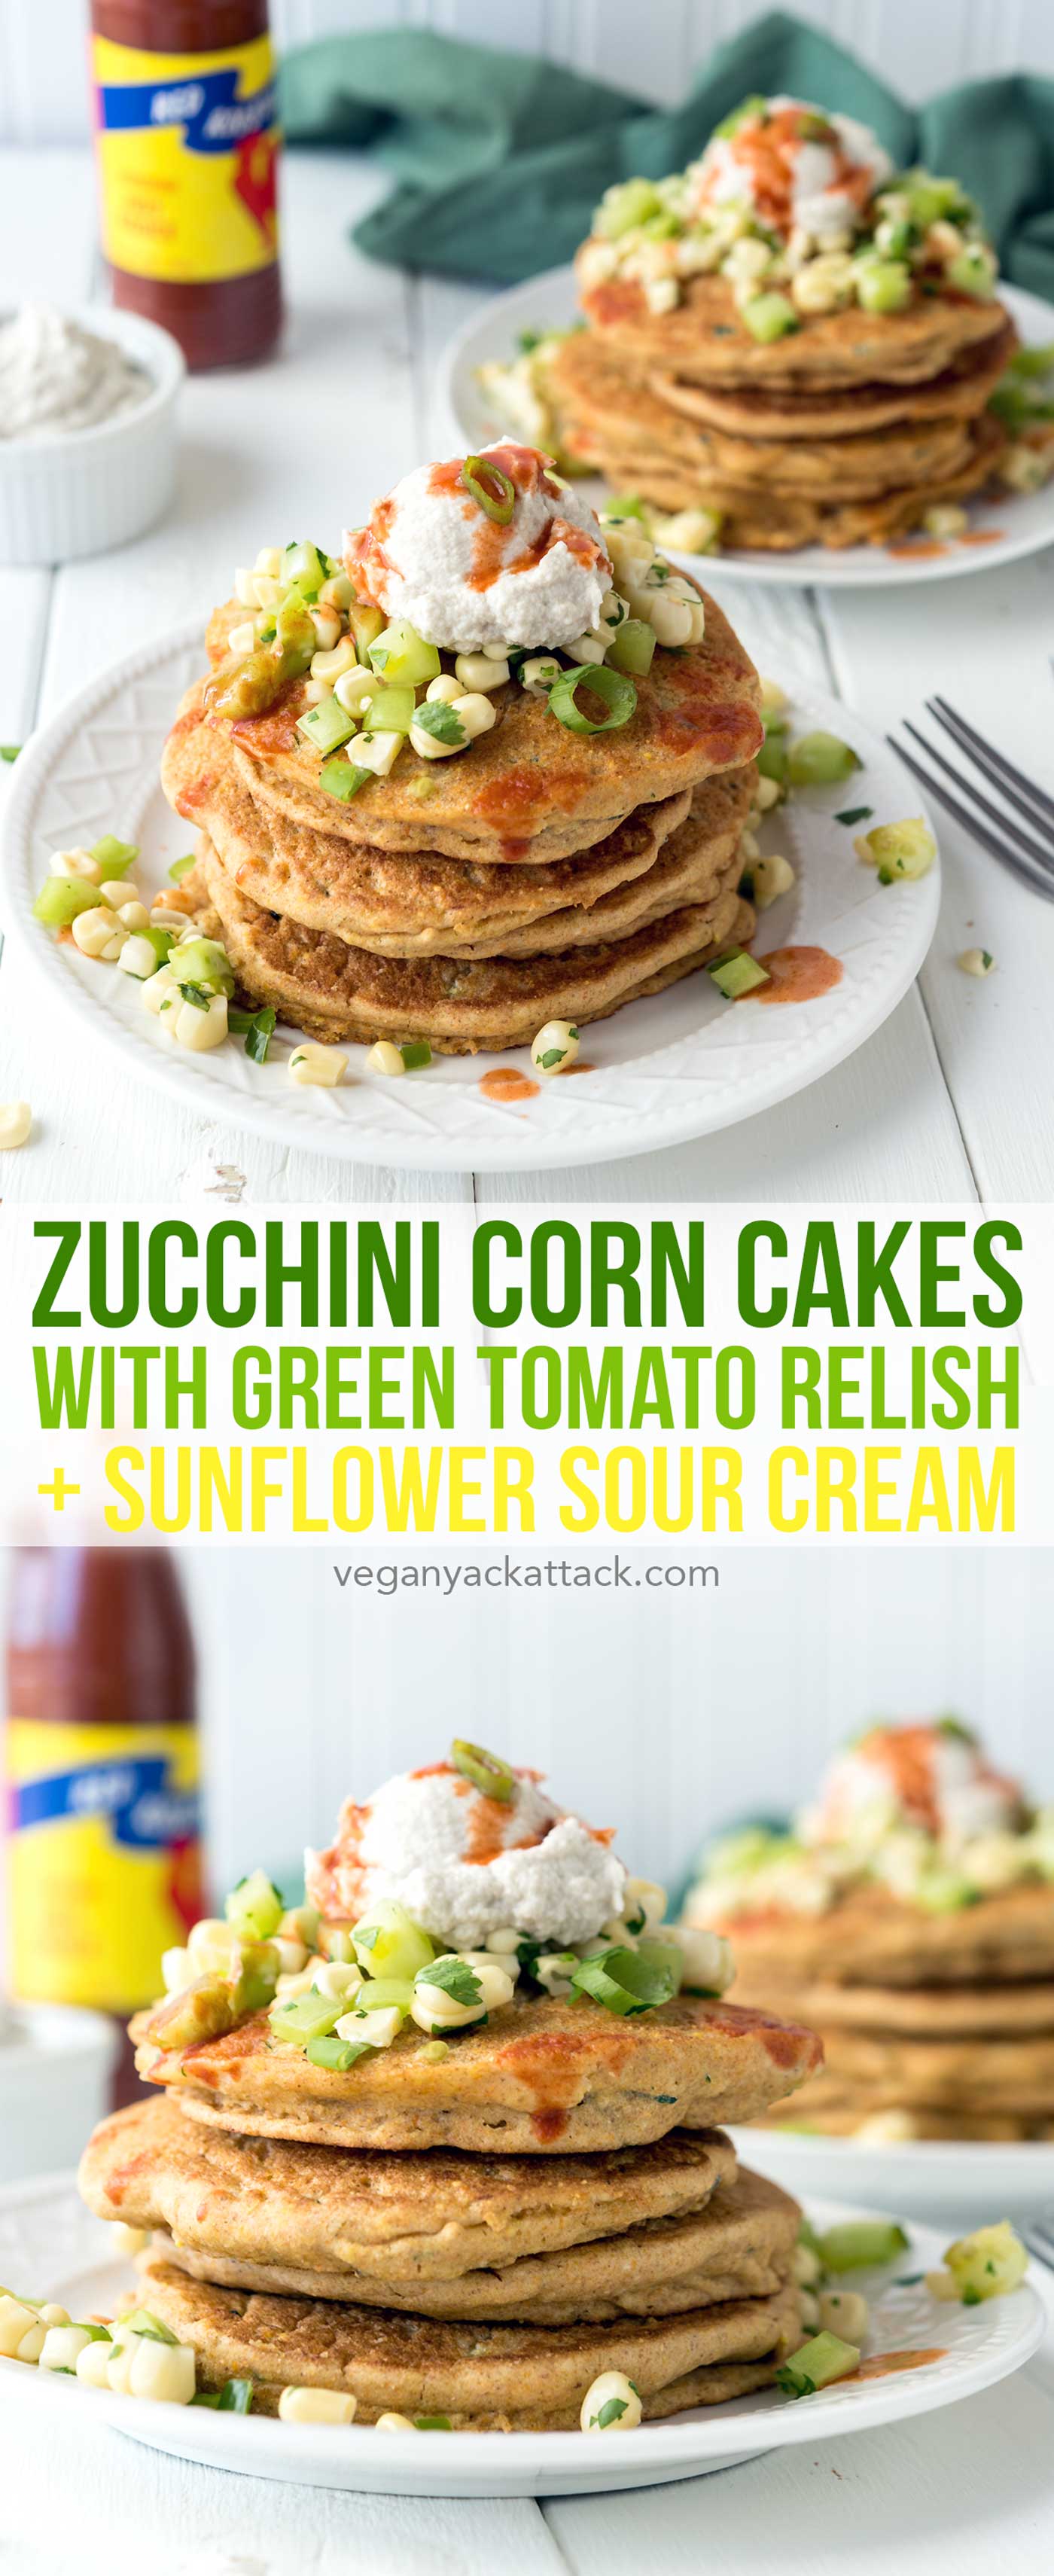 Zucchini Corn Cakes with Green Tomato Relish + Sunflower Sour Cream! A wonderful, savory, summer breakfast. #vegan #soyfree #nutfree #veganyackattack